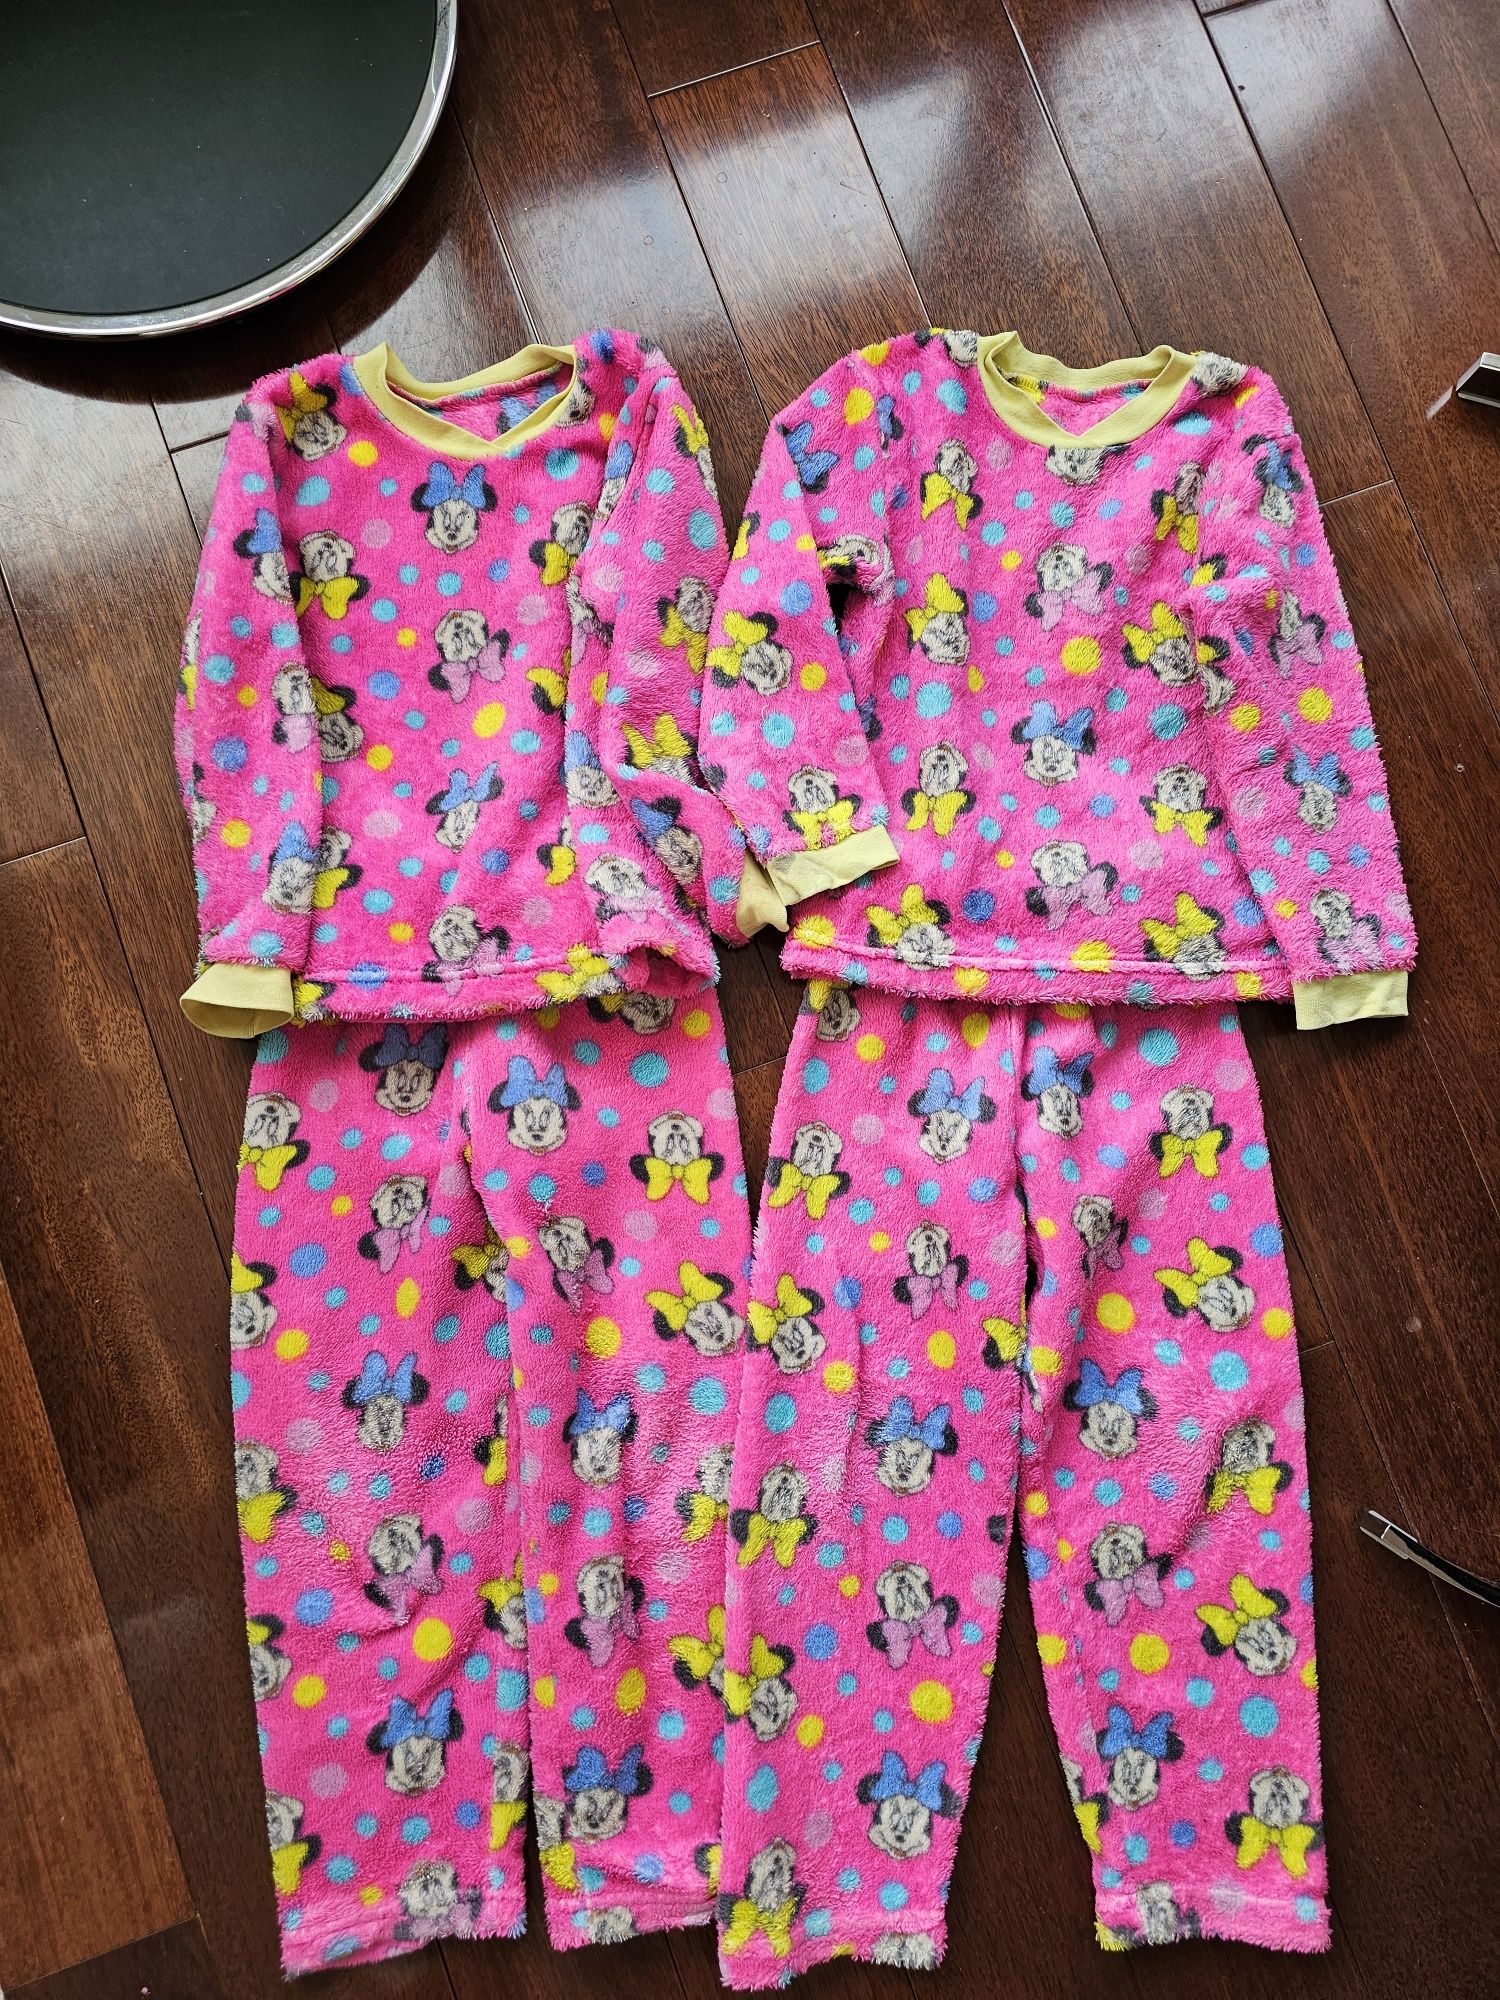 Пижамы, костюмы на флисе George, Mothercare,можно для двойн